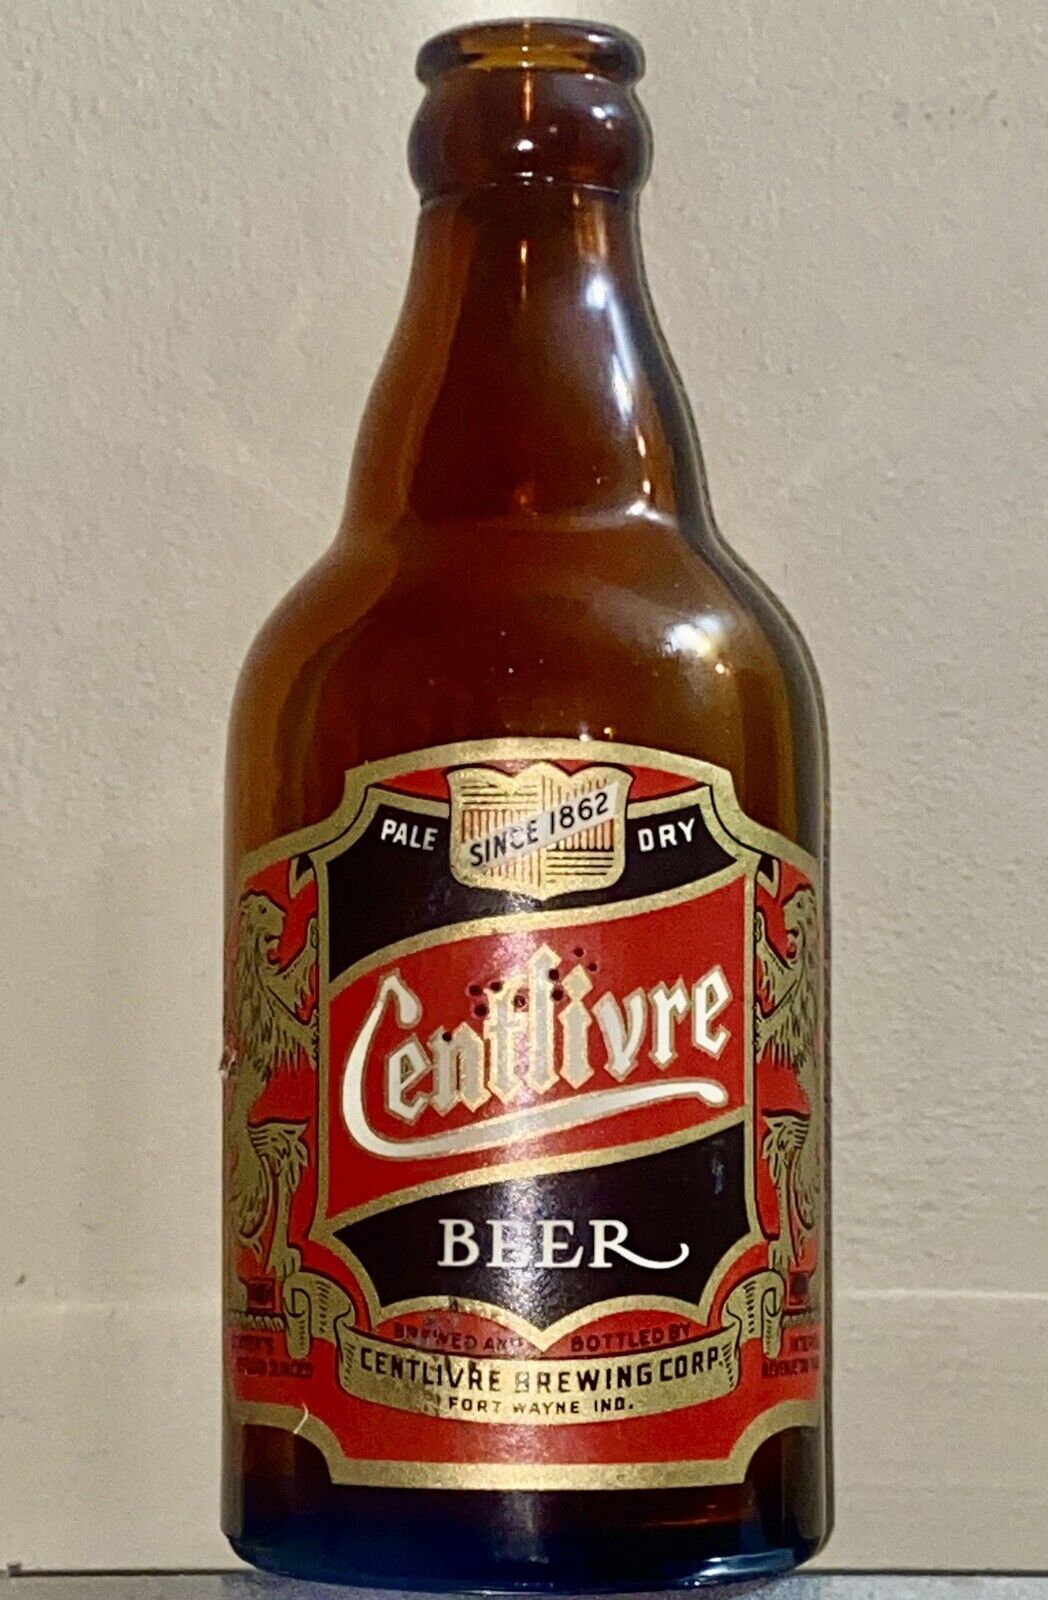 CENTLIVRE Steinie Beer Bottle, Centlivre Brewing Corp., IRTP, Fort Wayne, IN.